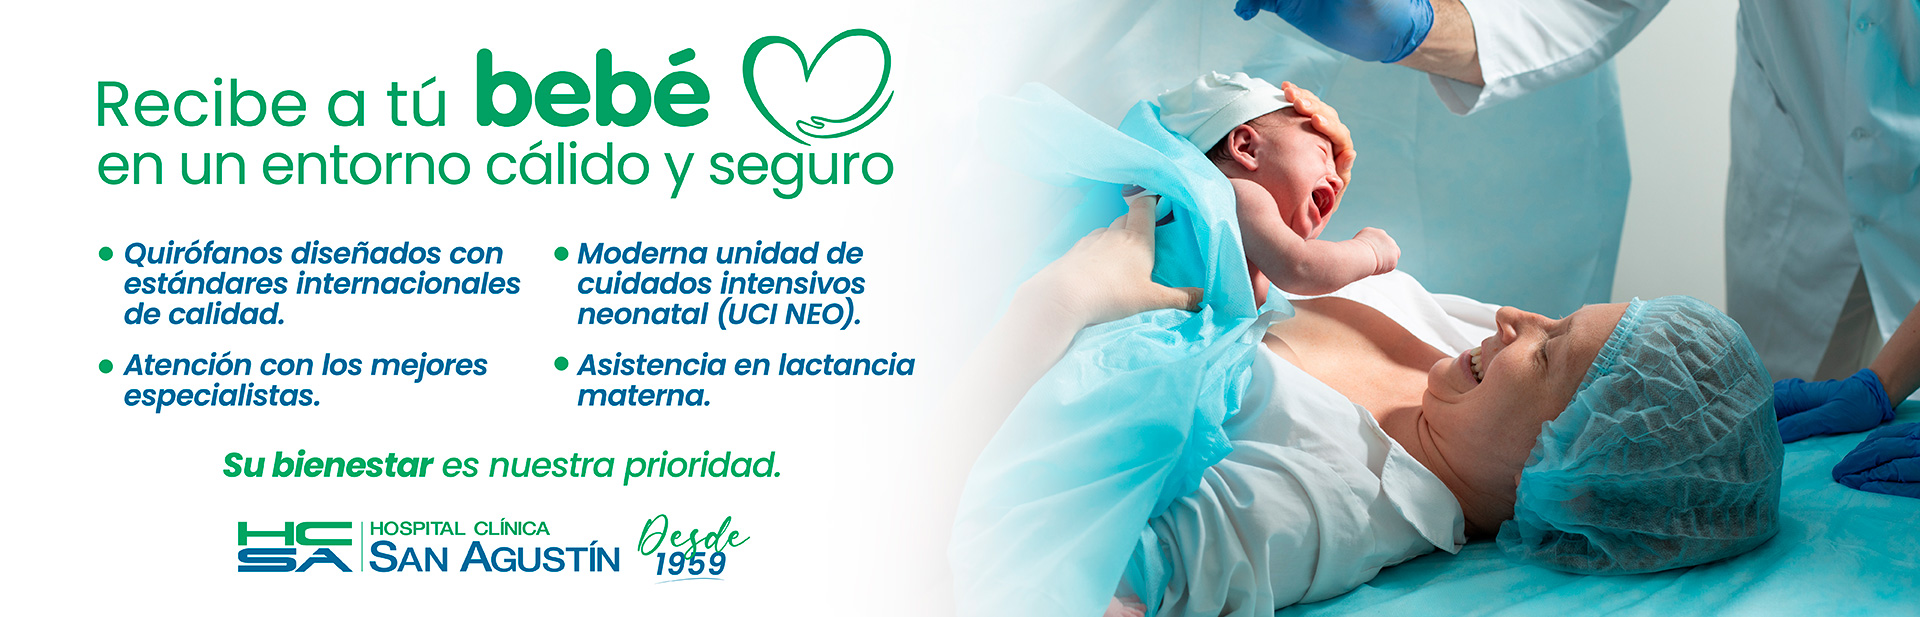 Recibe a tu bebé | Hospital Clínica San Agustín